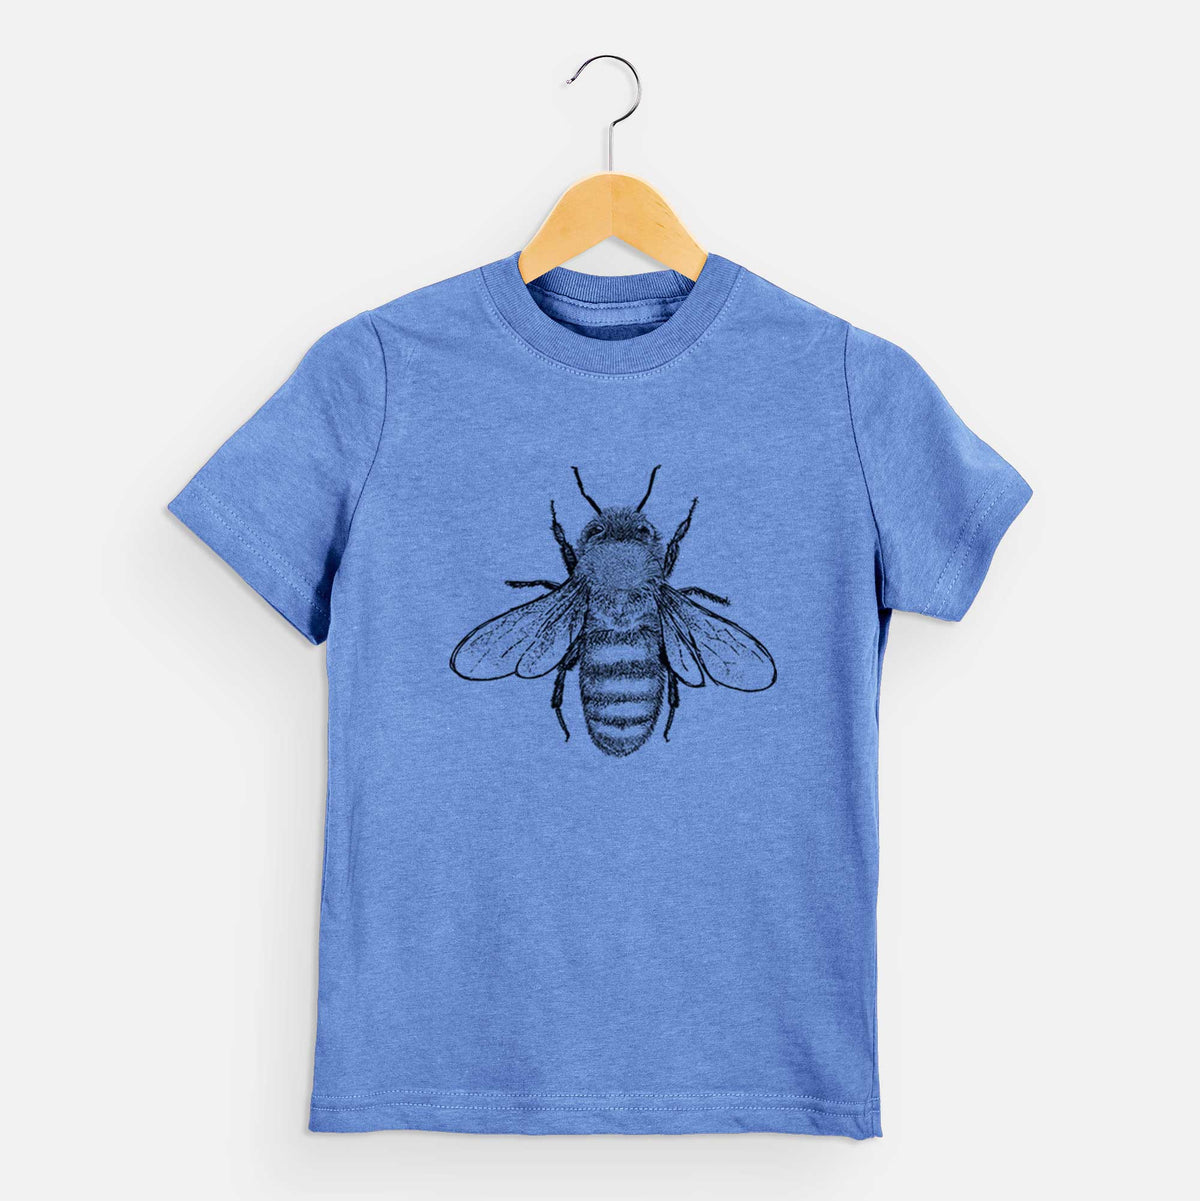 Apis Mellifera - Honey Bee - Kids Shirt